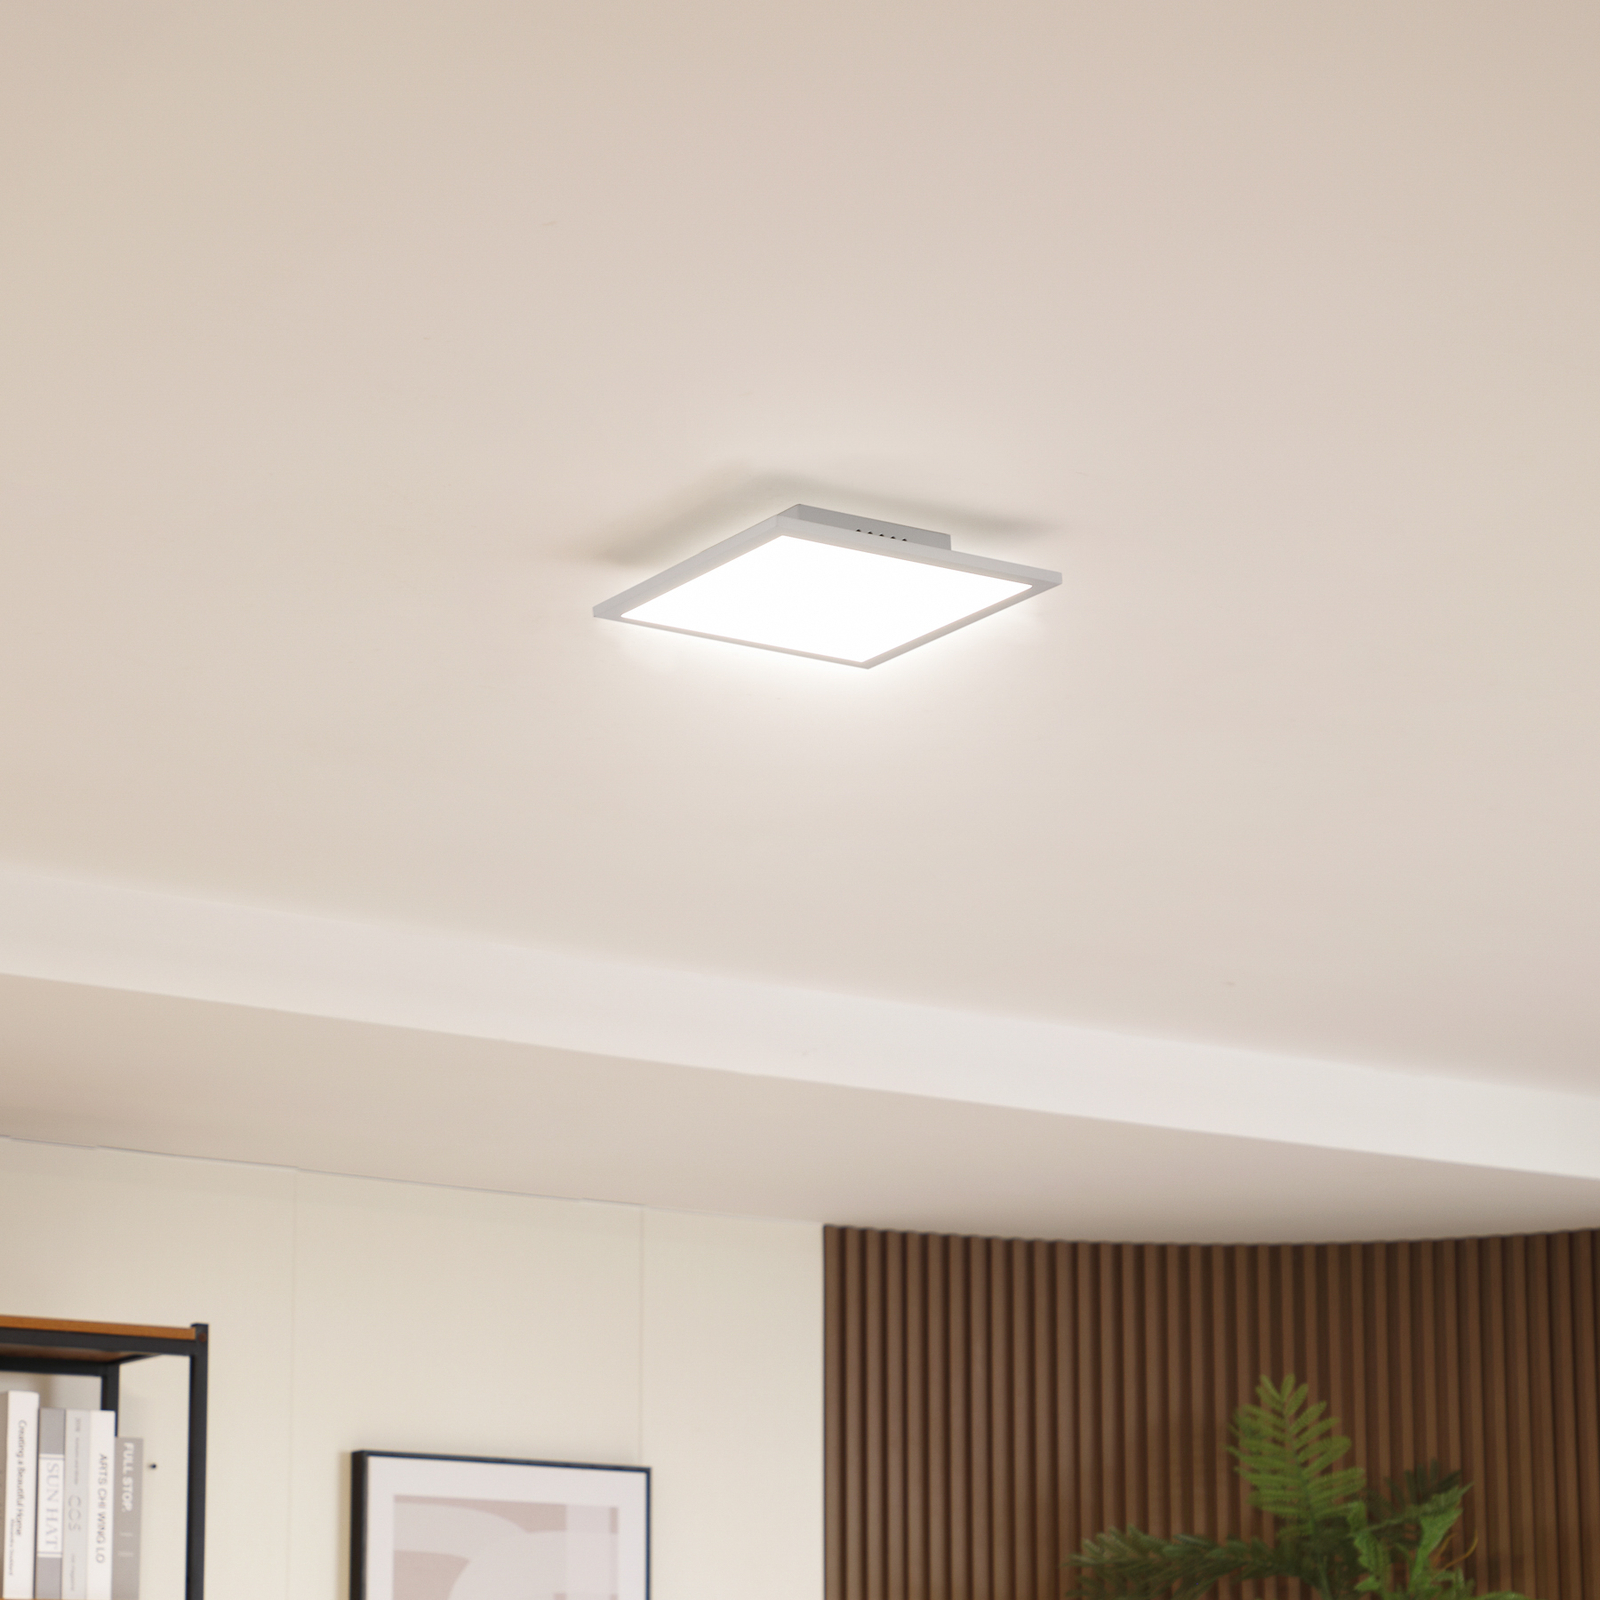 Lindby LED-paneeli Enhife, valkoinen, 29,5 x 29,5 cm, alumiini